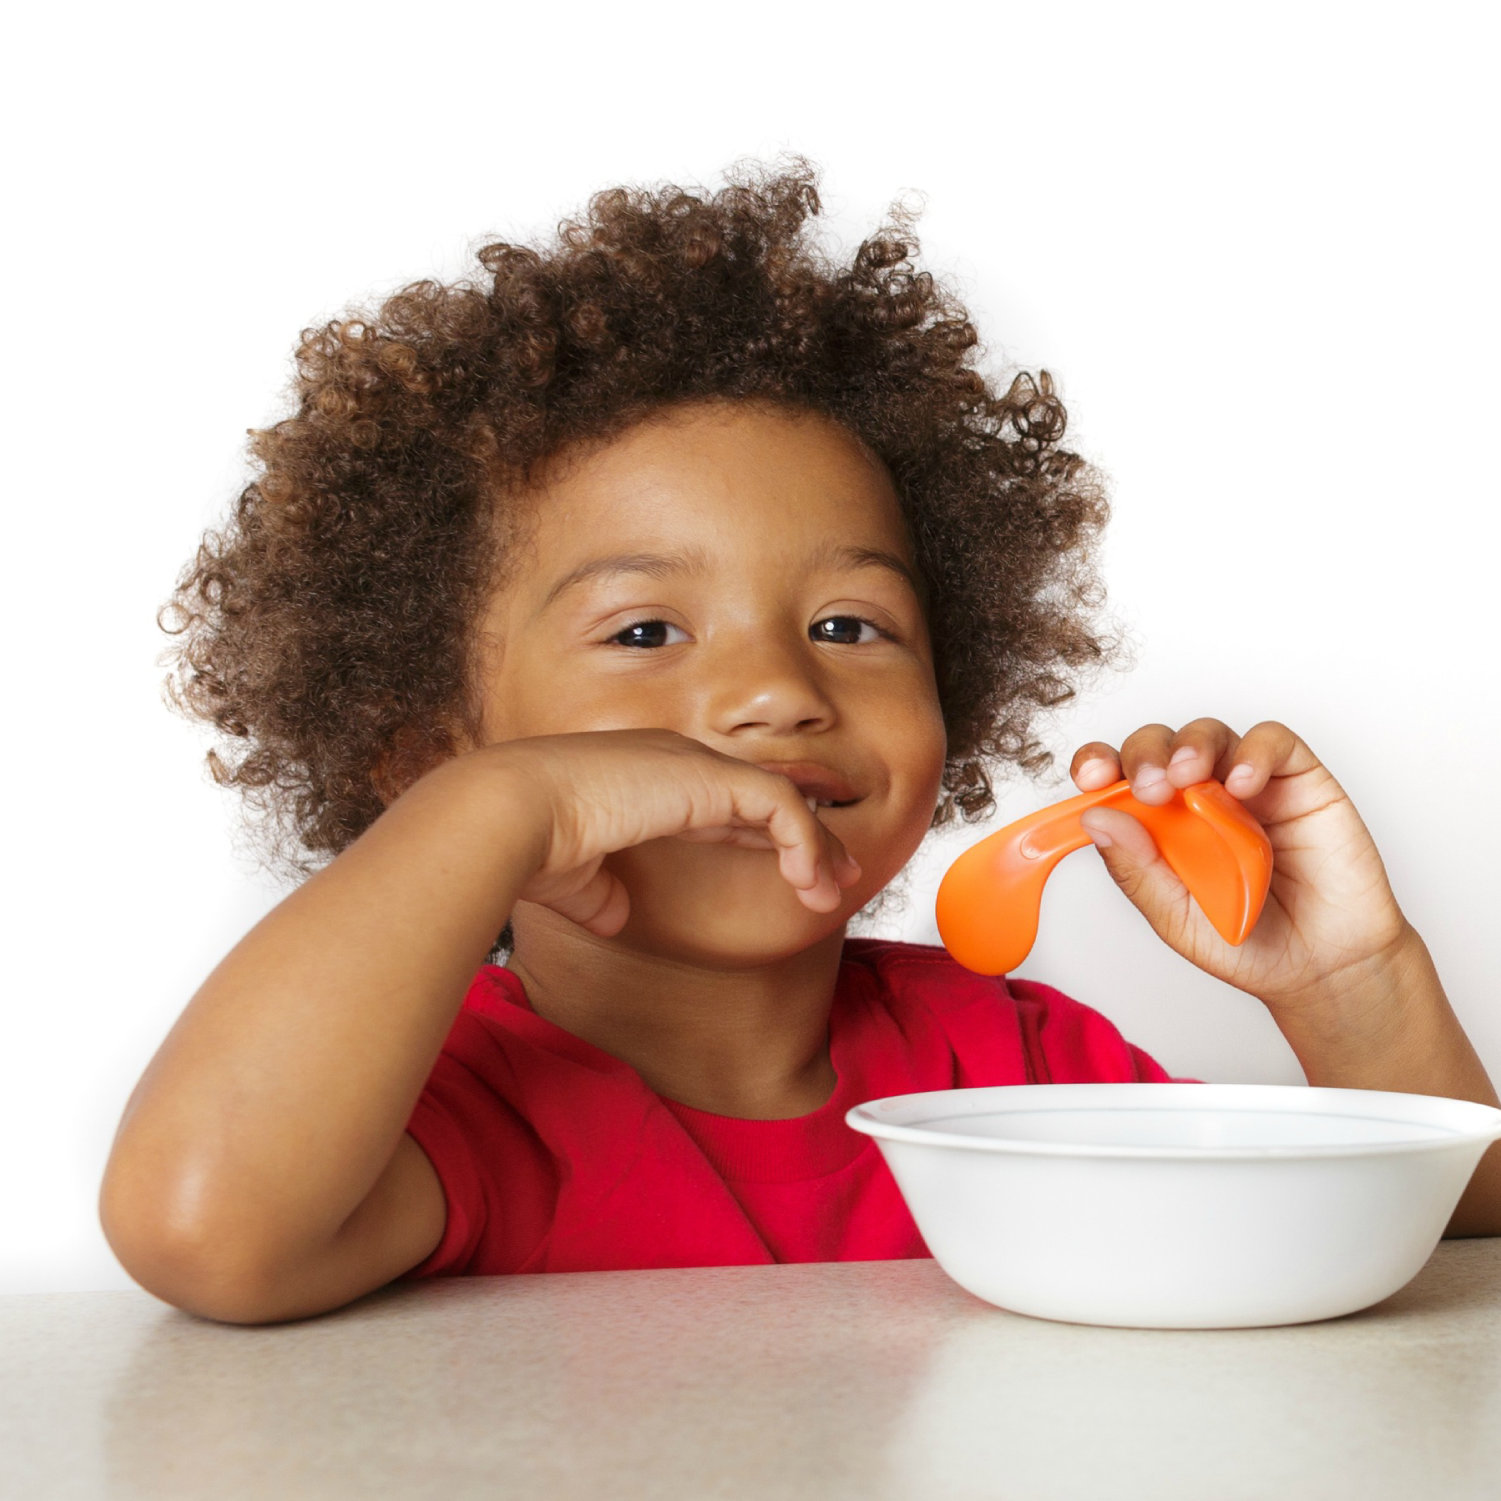 Kizingo Right Handed Toddler Spoon - Grapefruit